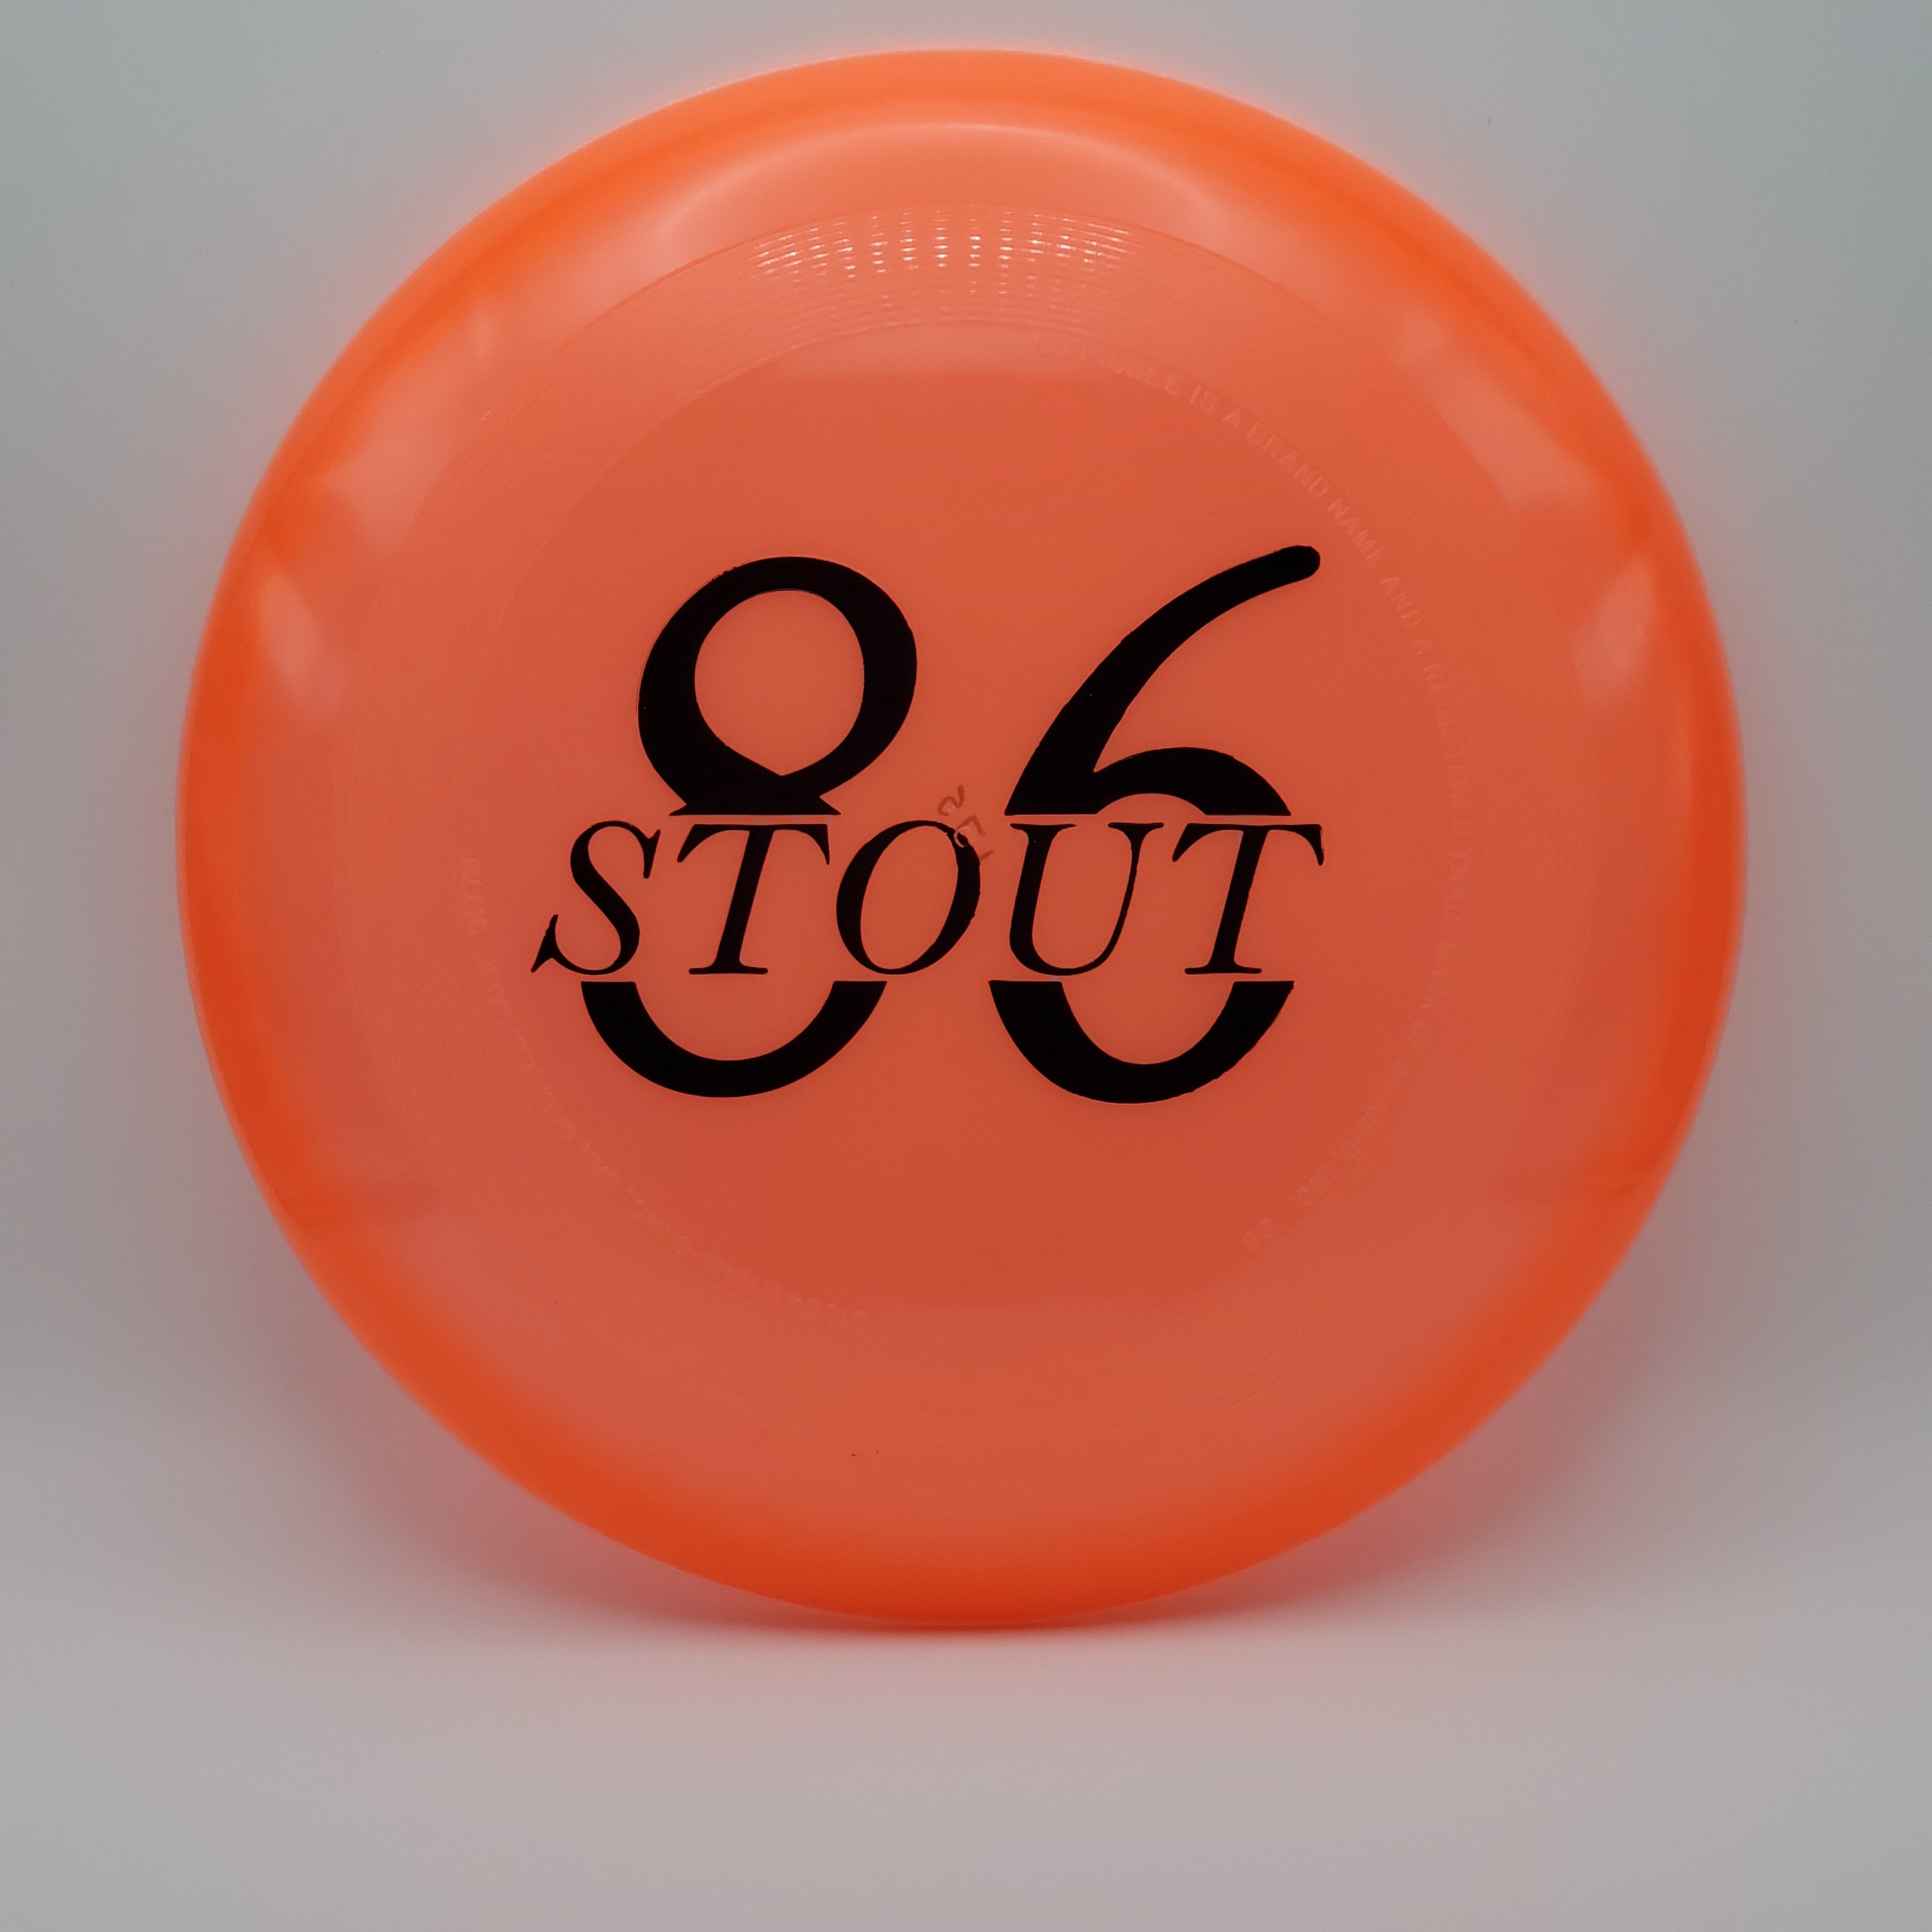 Wham-O 86 Stout Putter Golf Disc